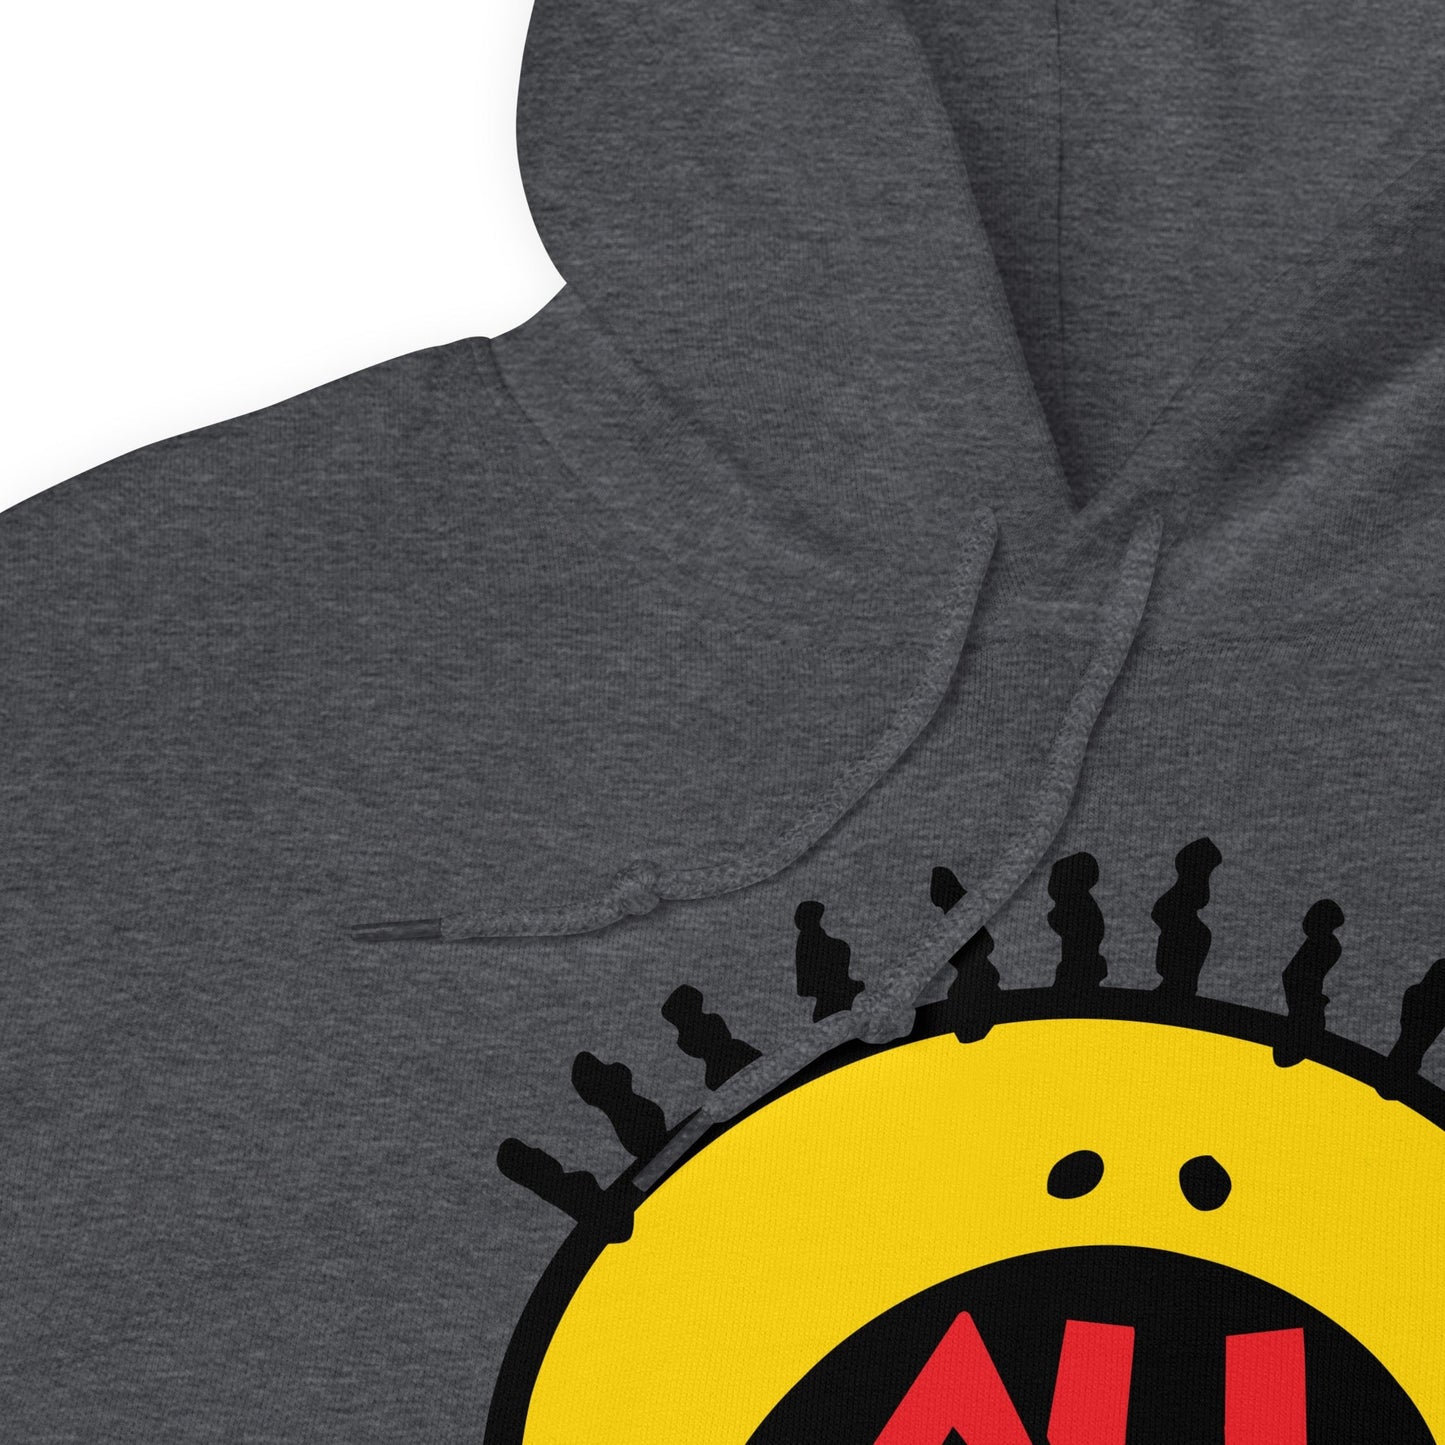 All That Original Logo Adult Hooded Sweatshirt - Paramount Shop